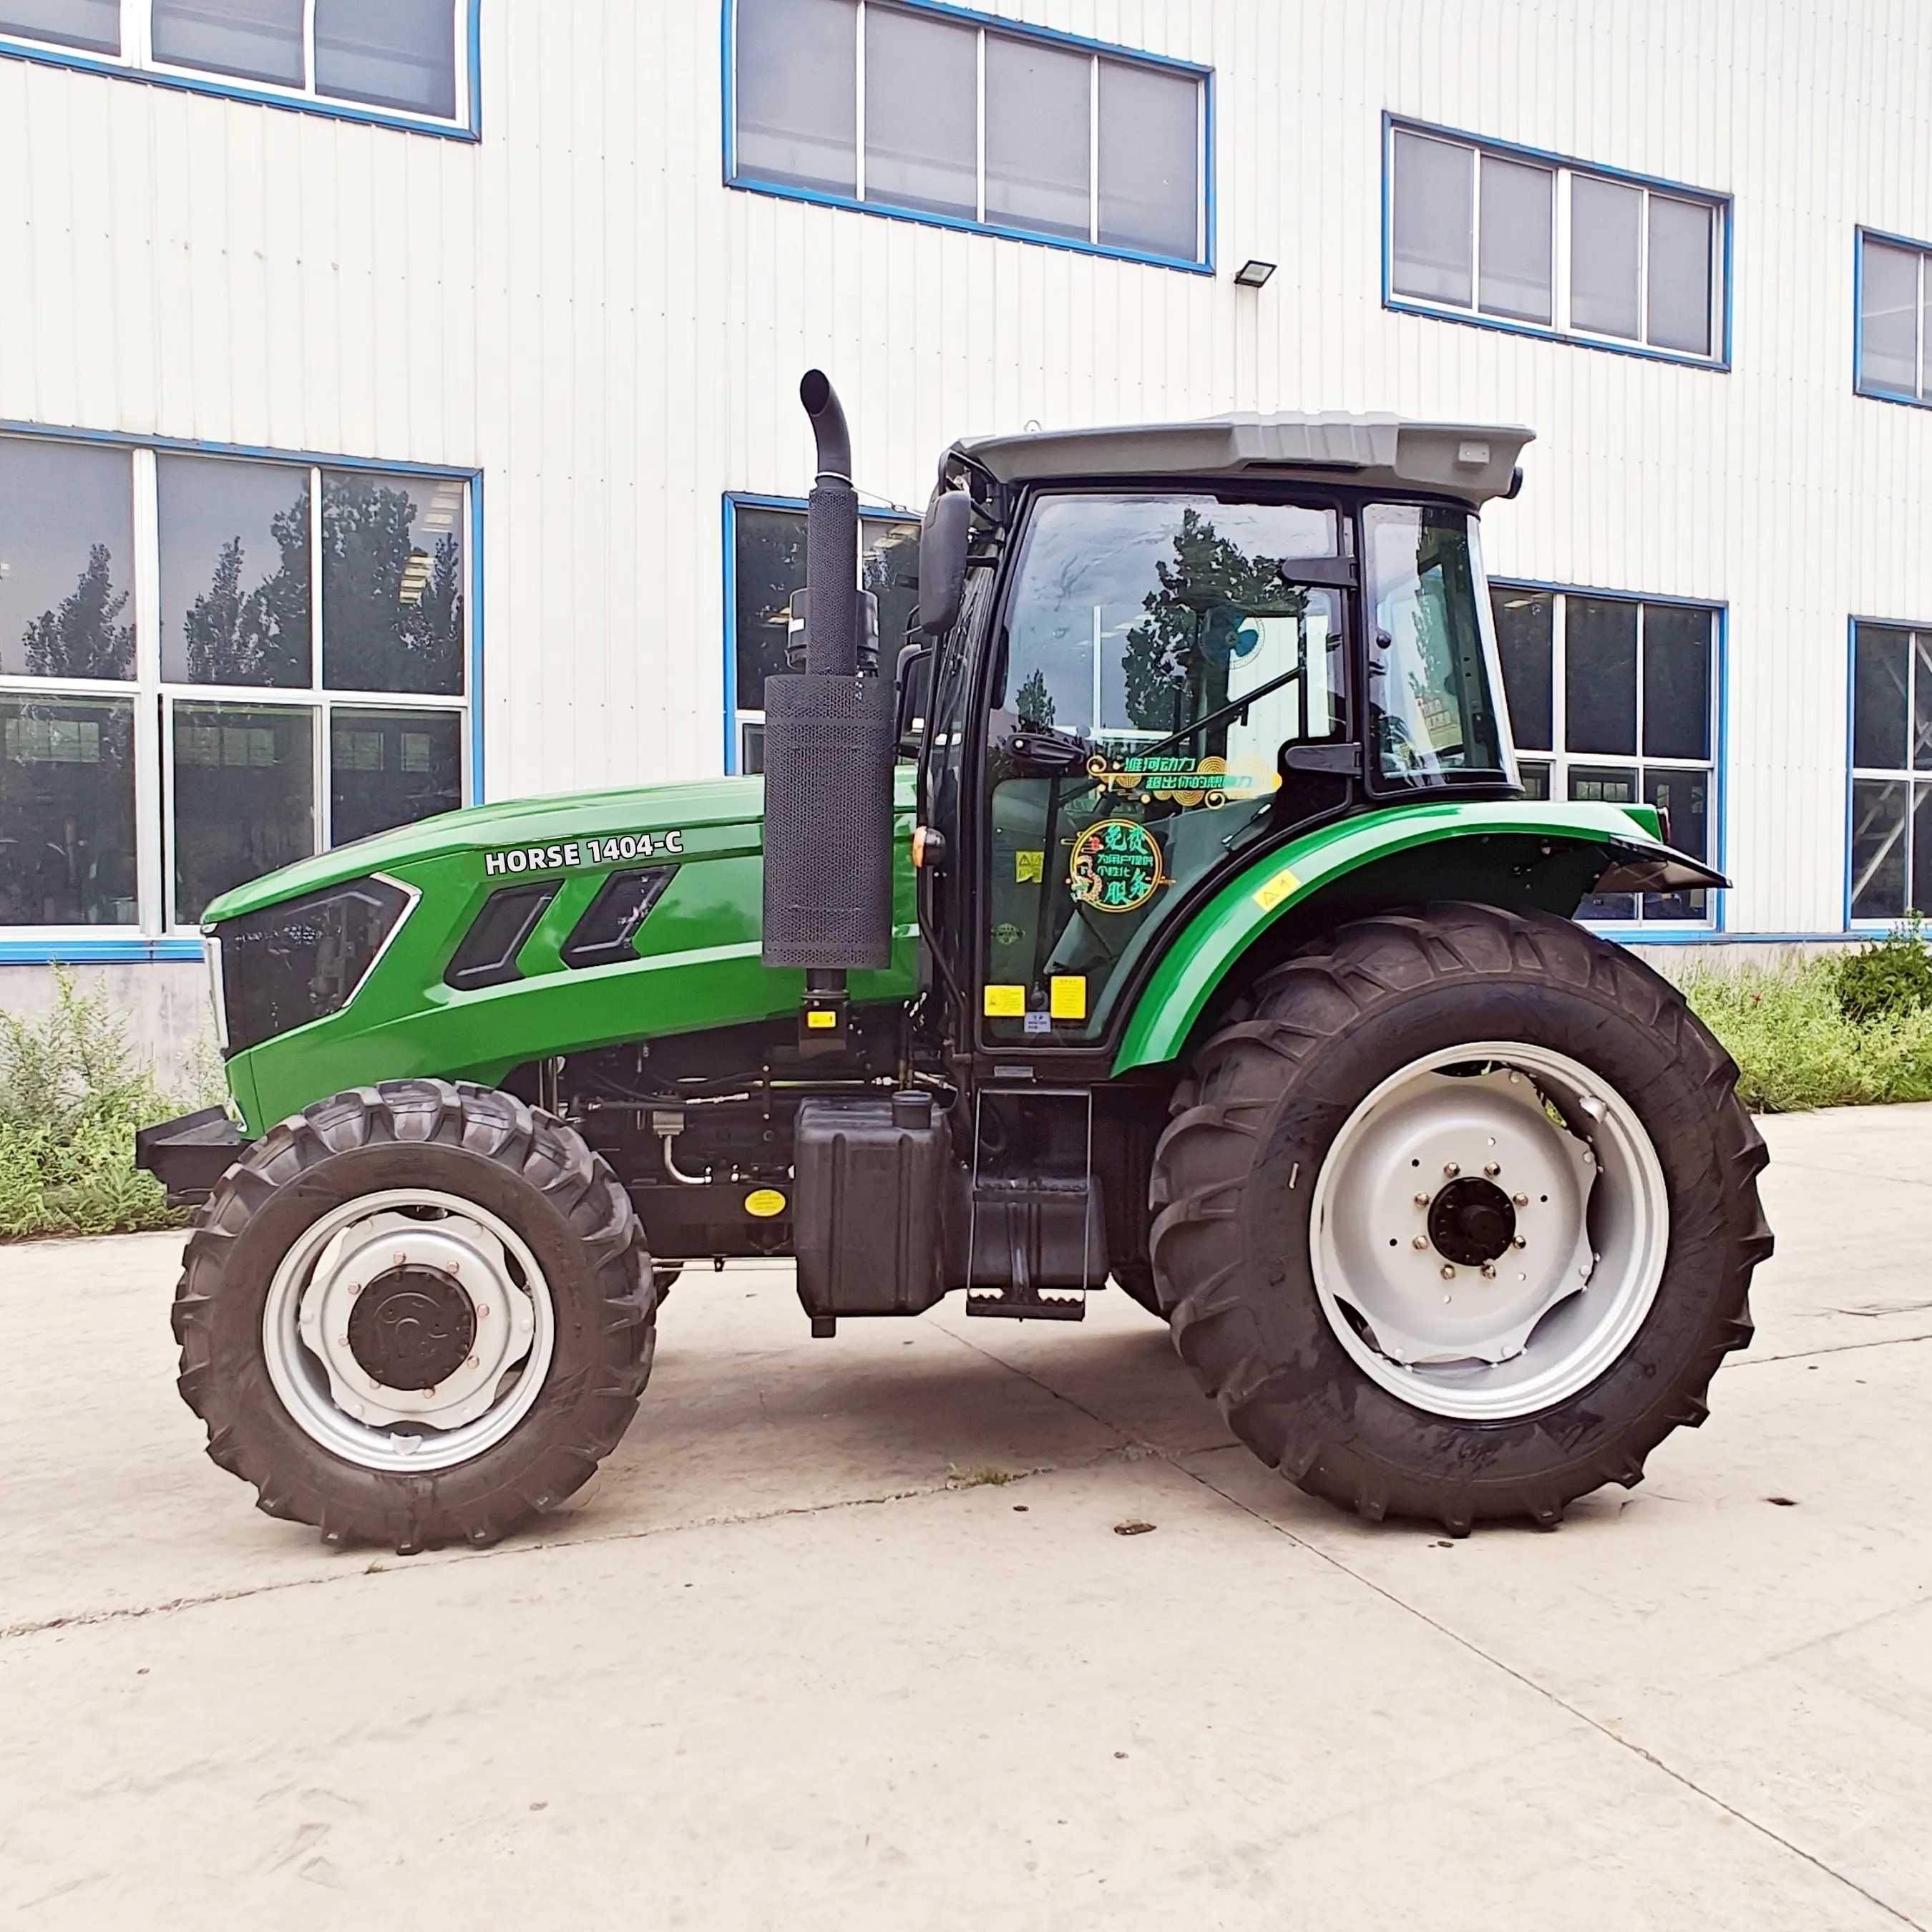 Tracteurs agricoles chinois machines et équipements agricoles tracteur agricole 4x4 pour agf